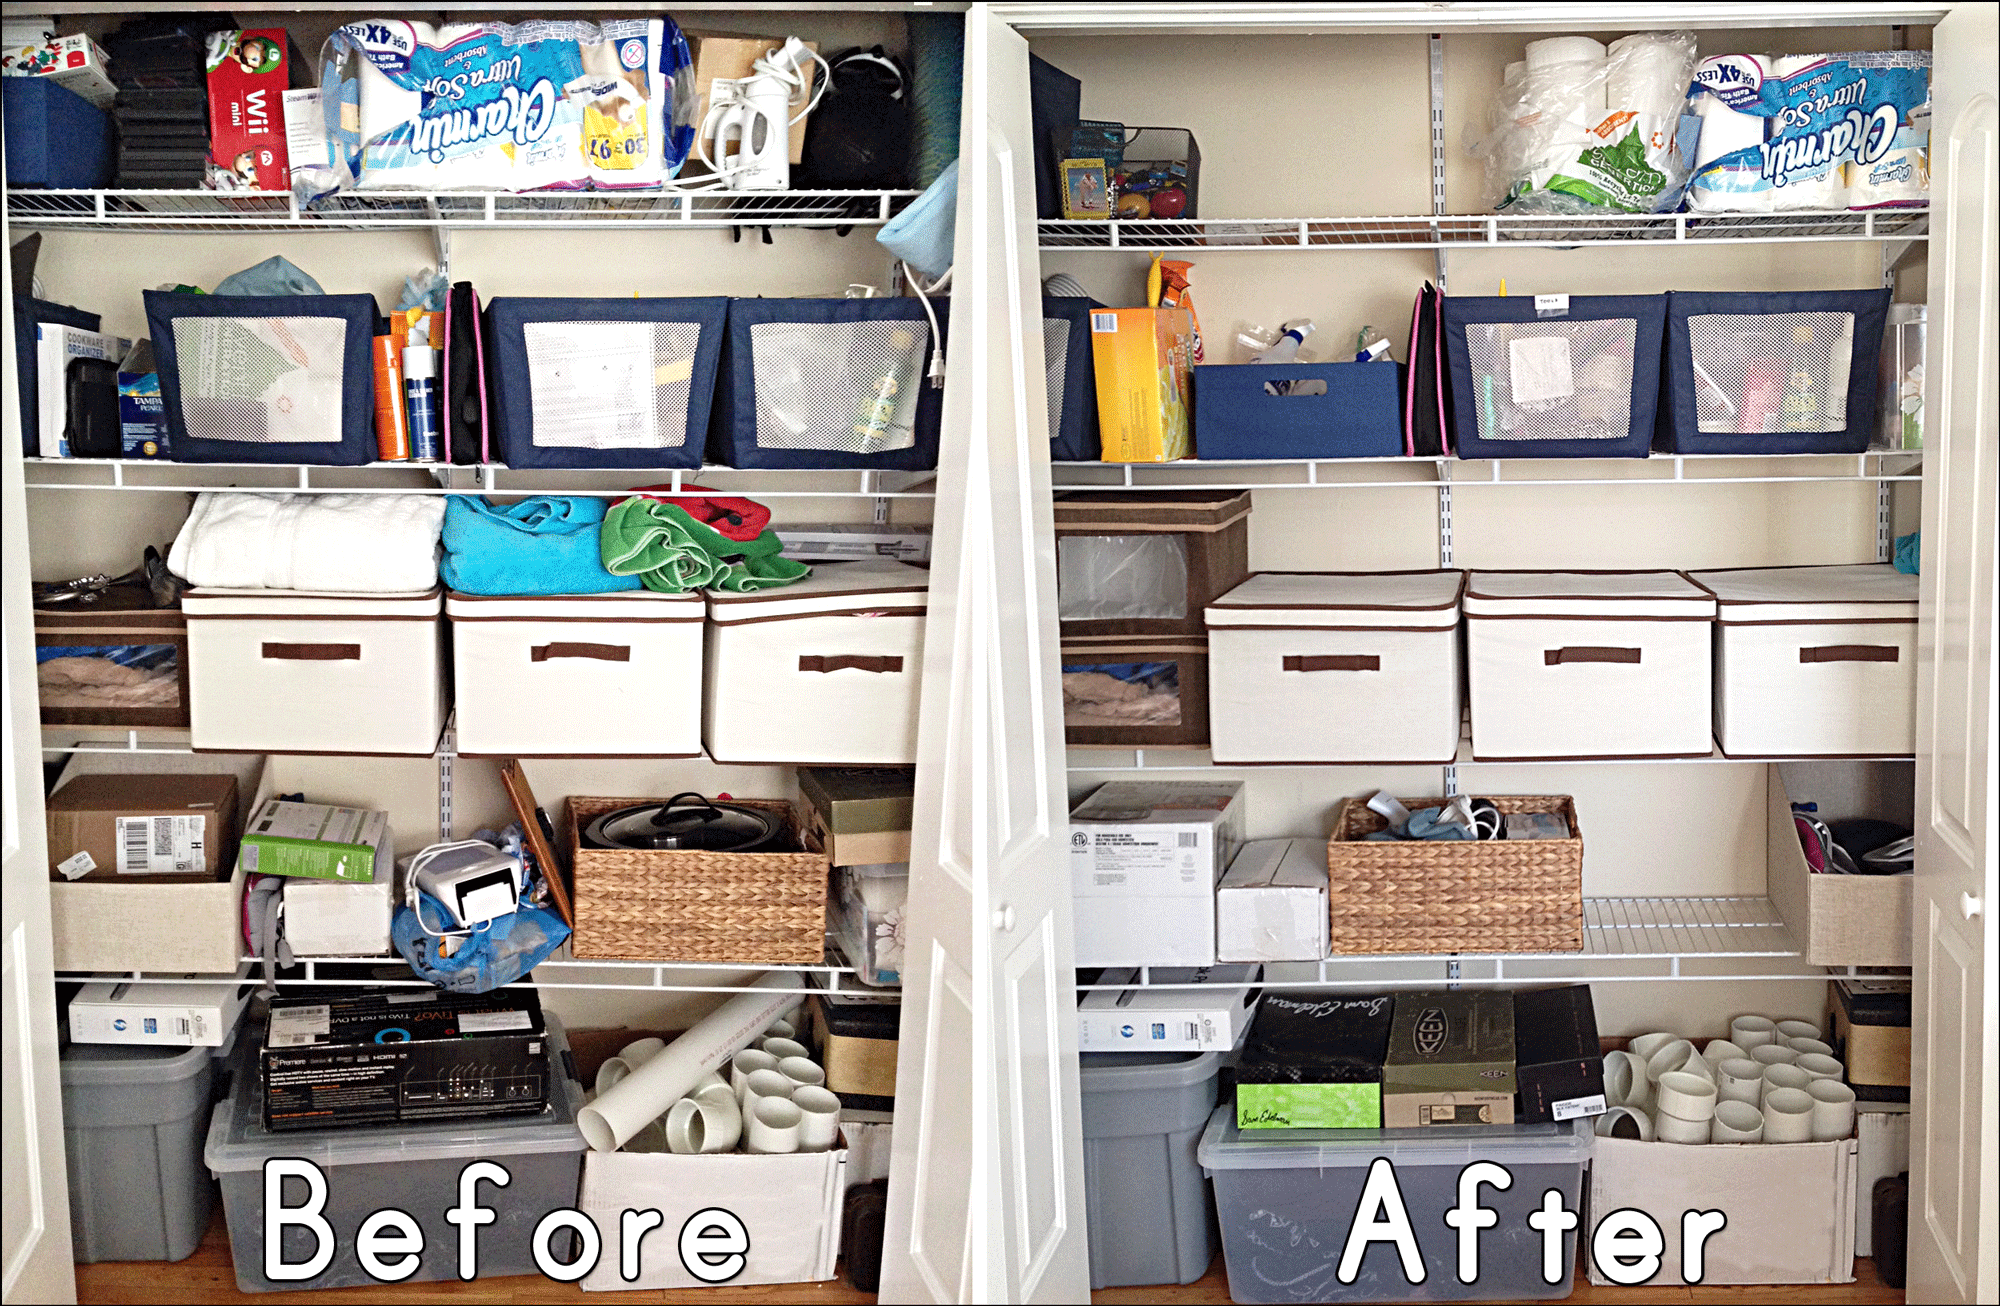 http://pinsandprocrastination.com/wp-content/uploads/2014/03/Before-and-after-closet.png?x29453